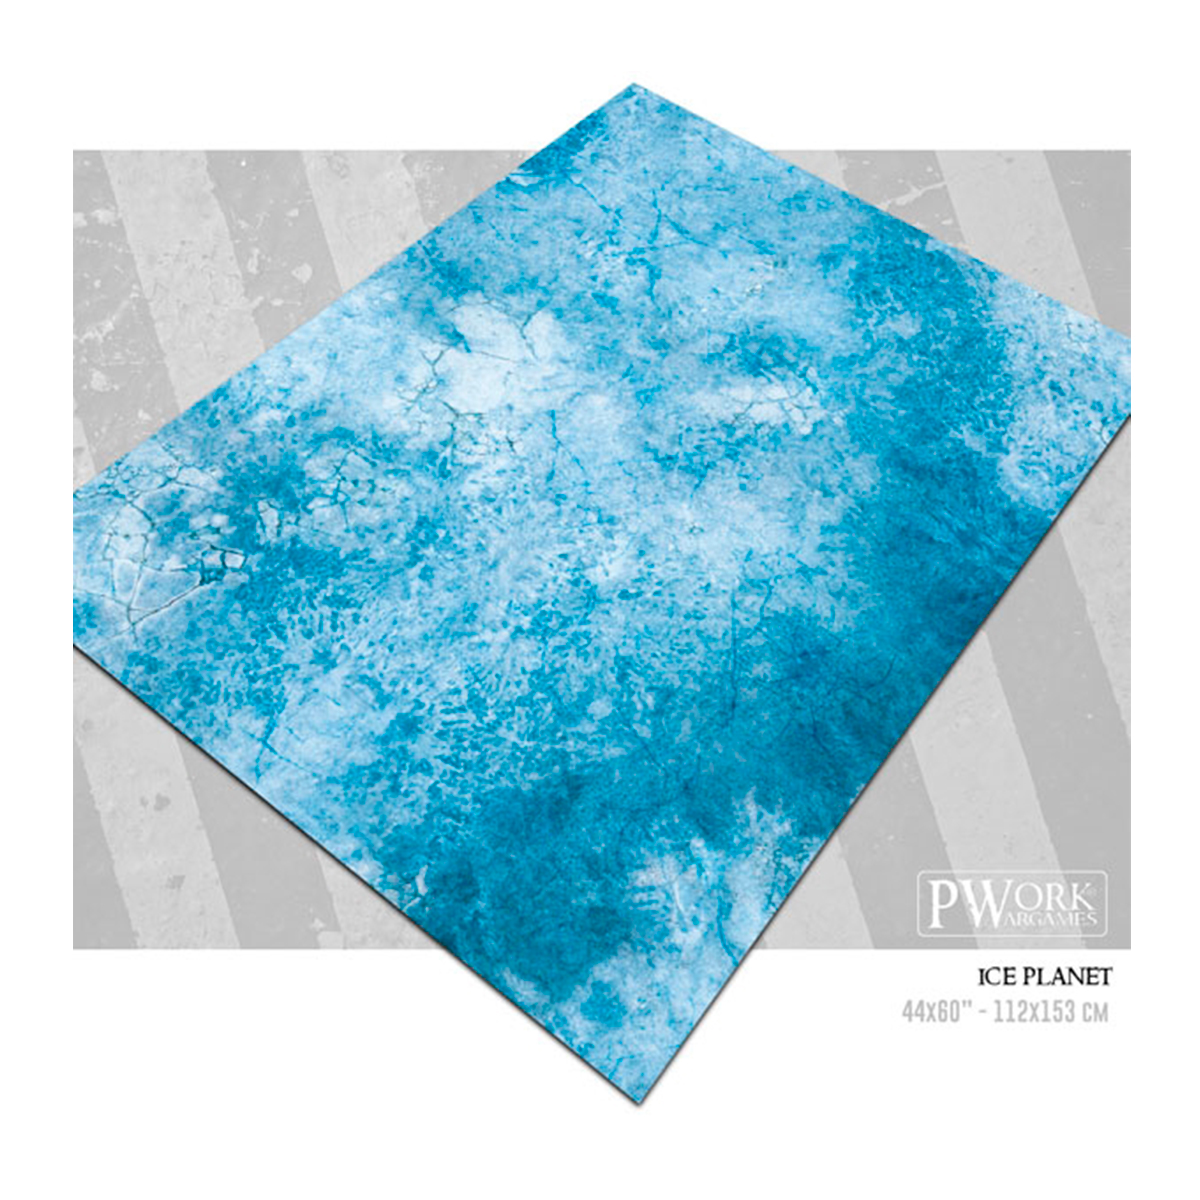 PVC Mat Ice Planet 44×60″